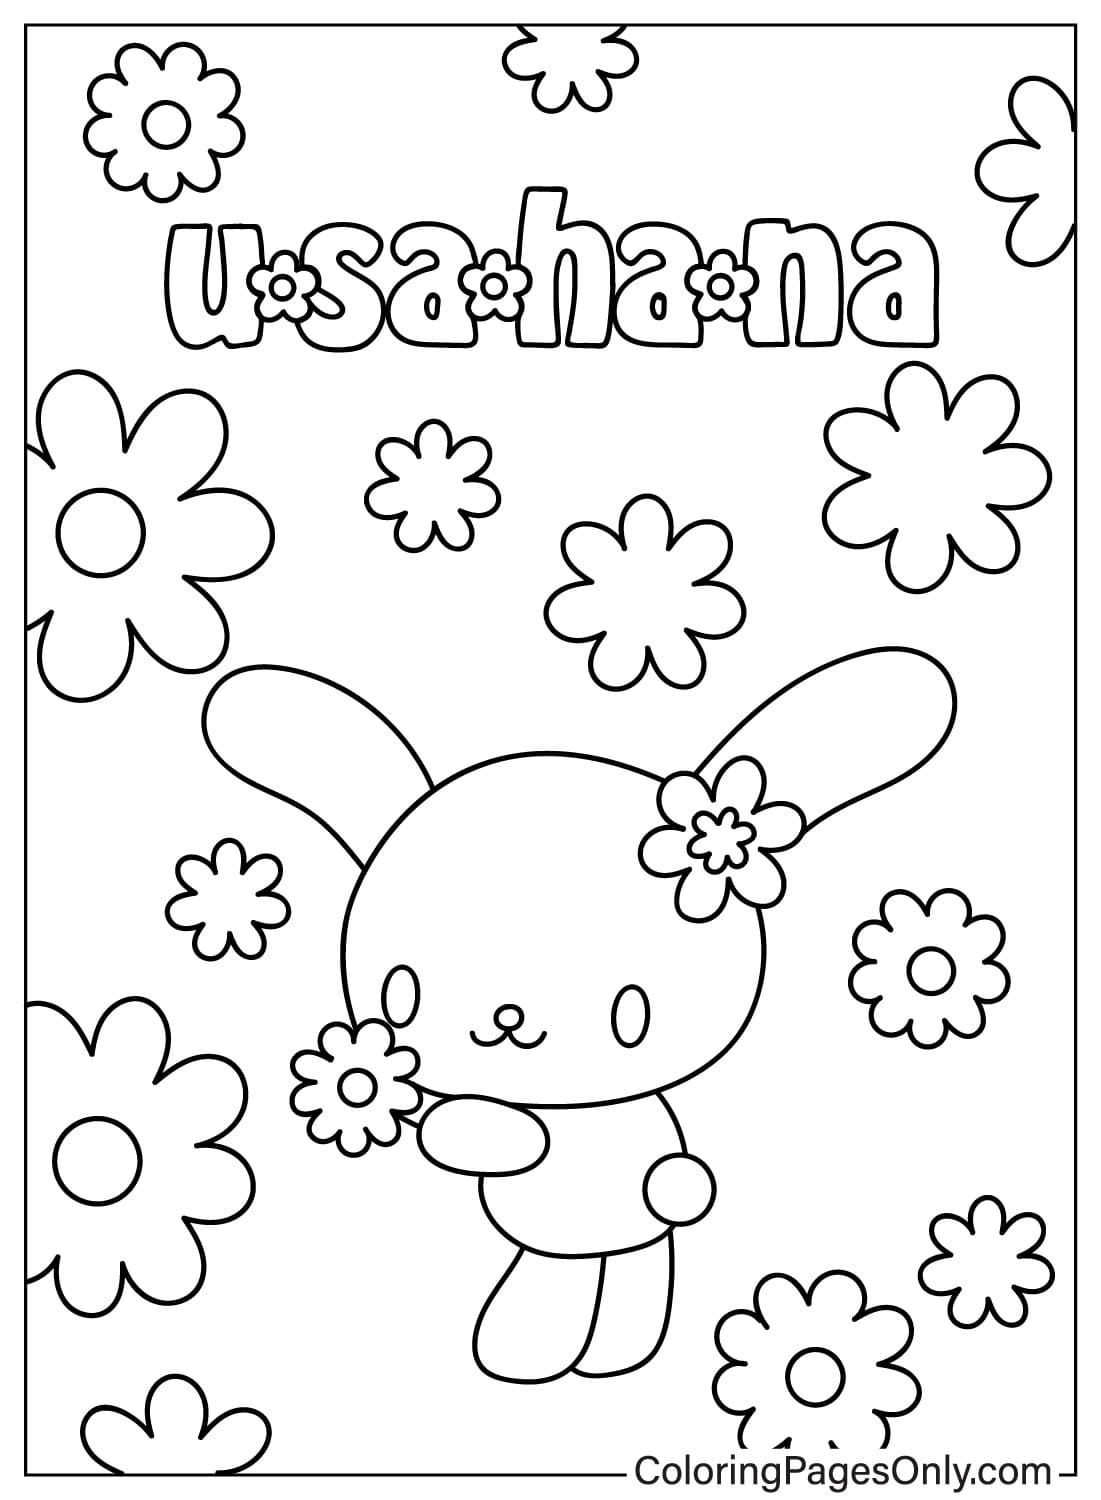 Usahana Coloring Sheet from Usahana